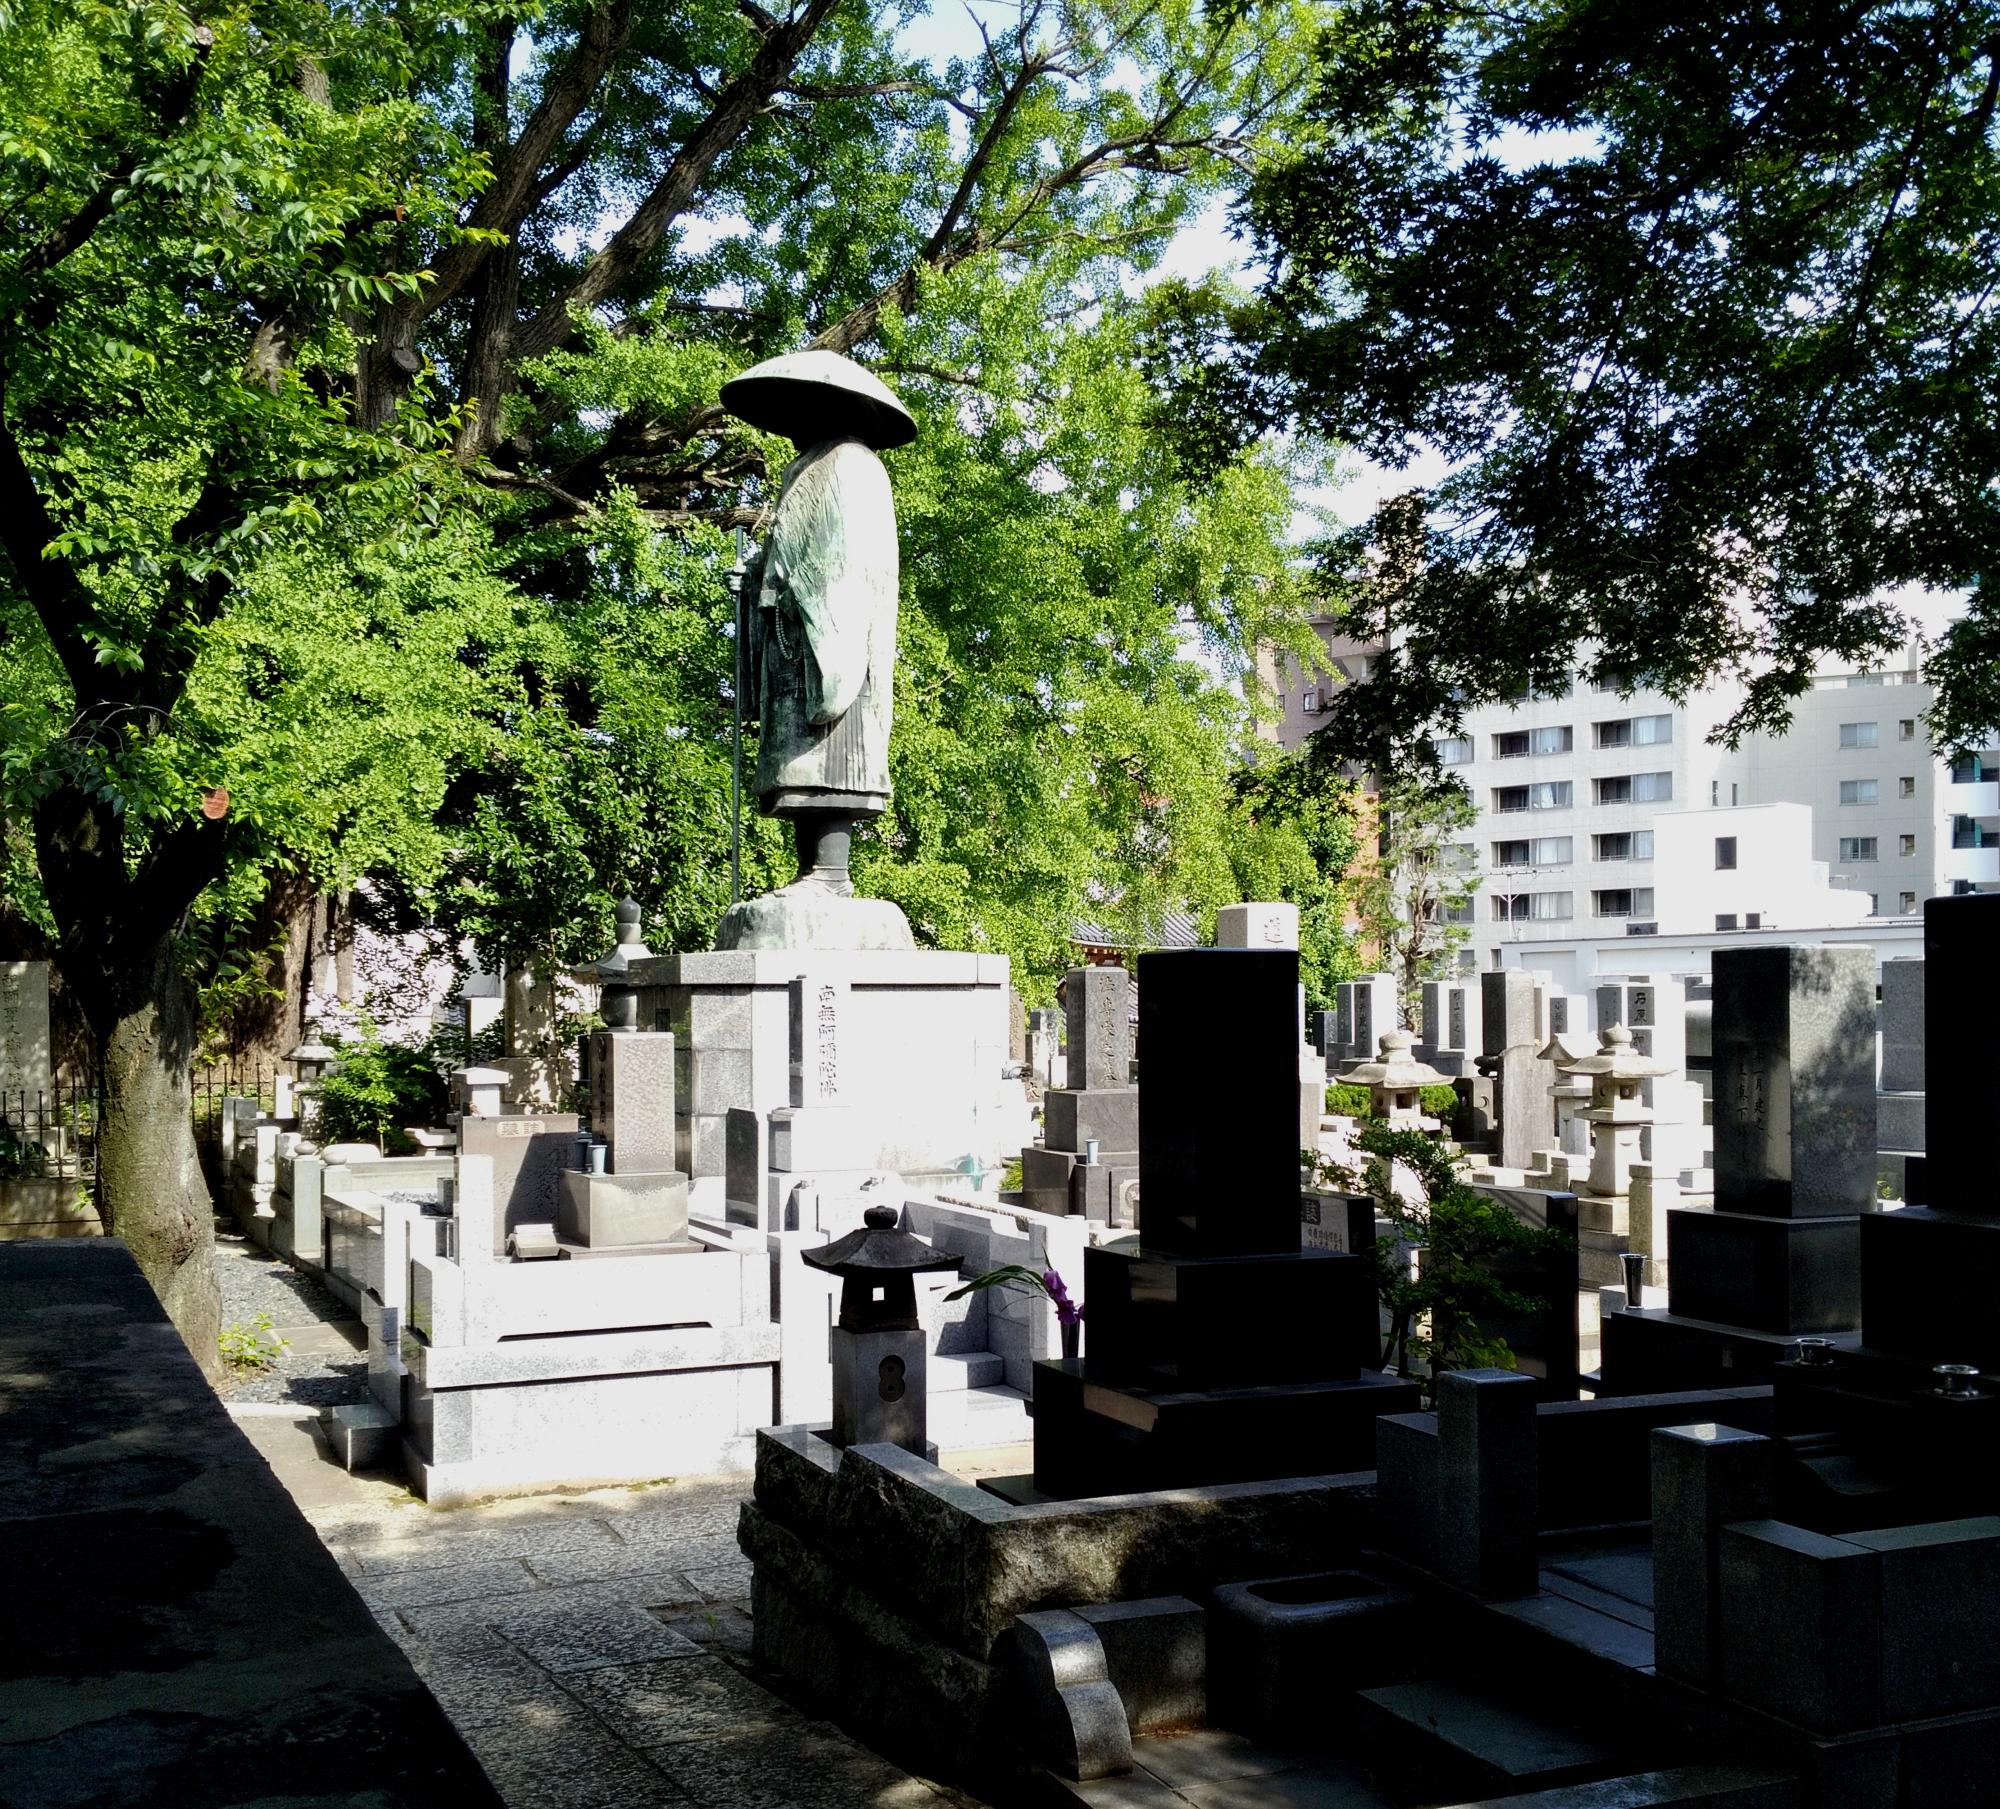 Tokyo (2017) - Cemetery